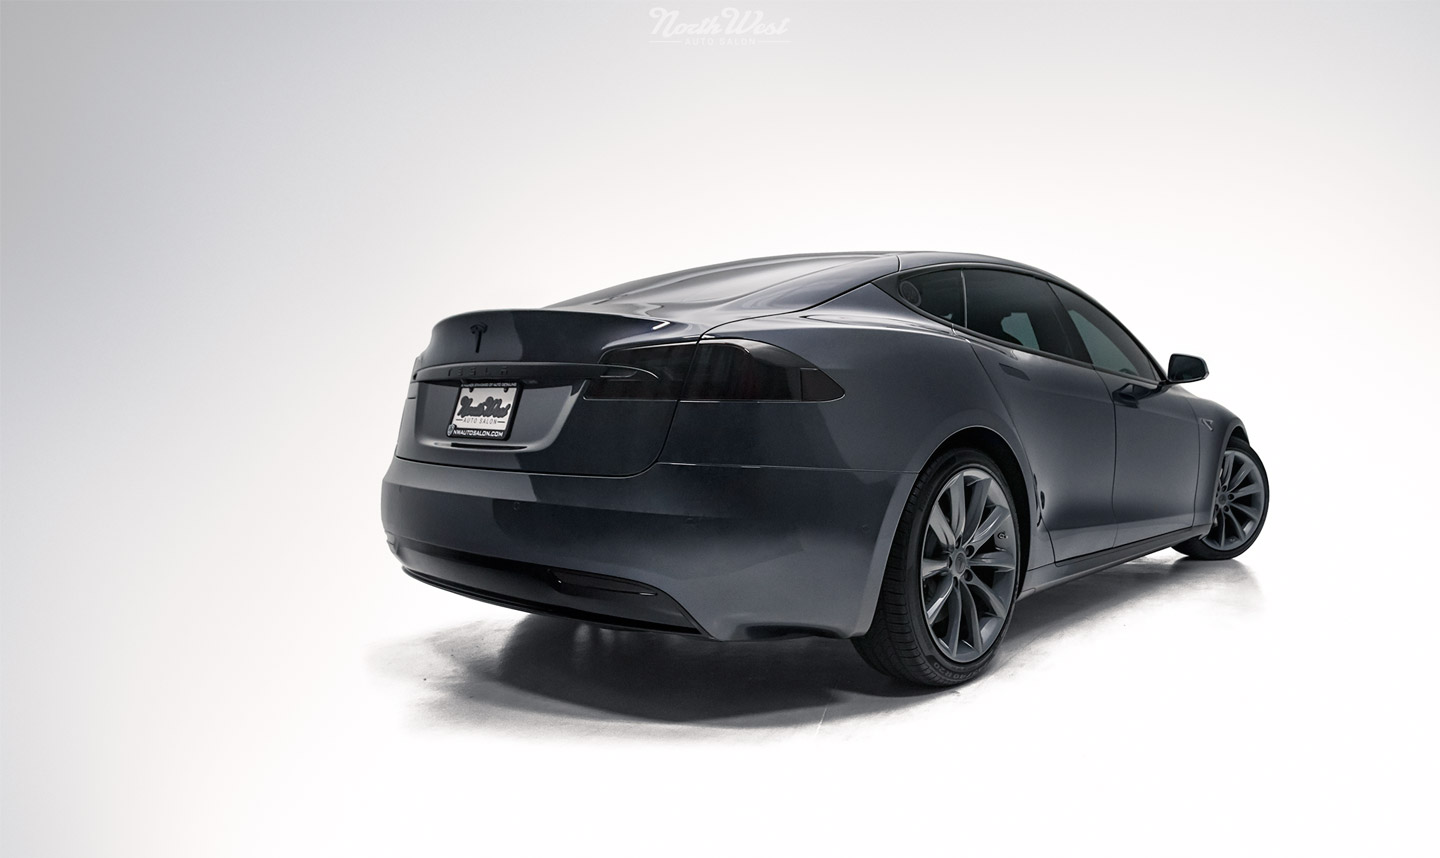 Tesla-Motors-Model-S-Facelifted-new-car-detail-xpel-chrome-delete-vinyl-wrap-rear-qtr.jpg